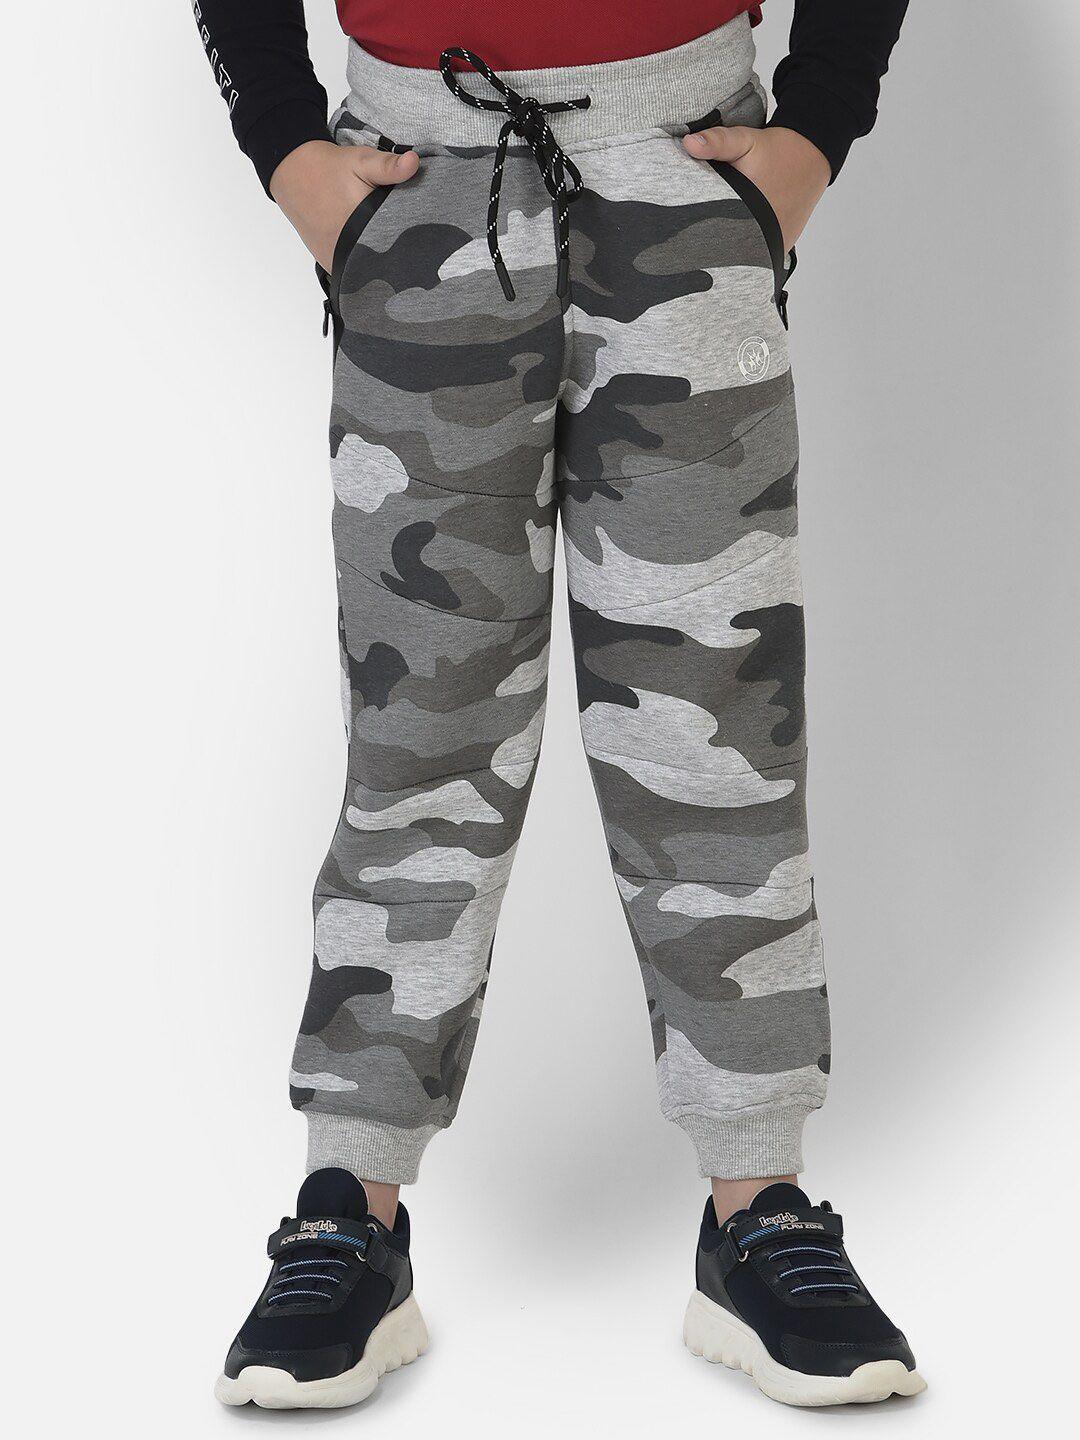 crimsoune-club-boys-grey-melange-camouflage-printed-urban-slim-fit-joggers-trousers